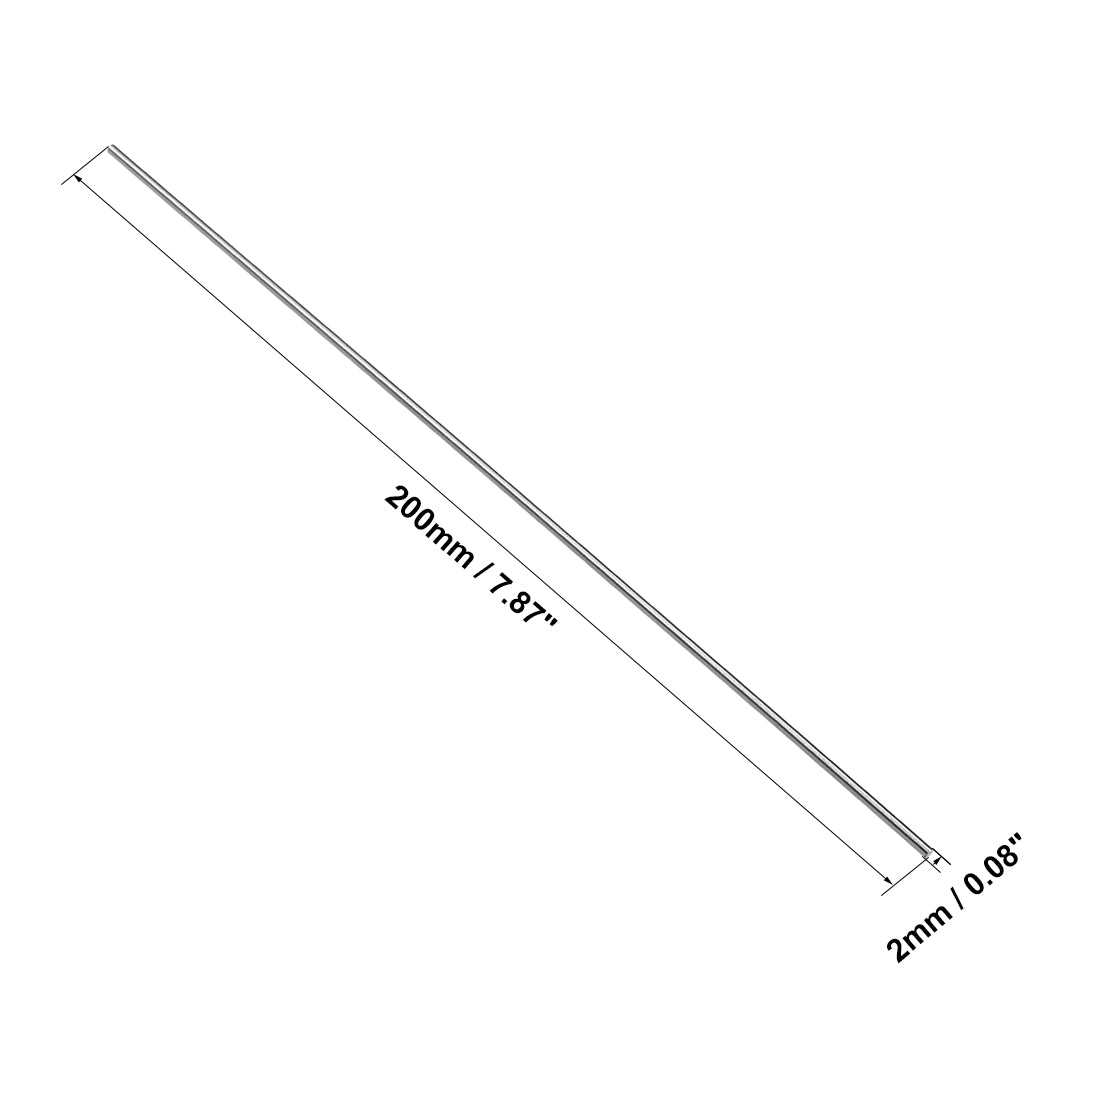 uxcell Uxcell Round Rod 2mm Diameter 200mm Length HSS Lathe Bar Stock DIY Craft Tool 5 Pcs